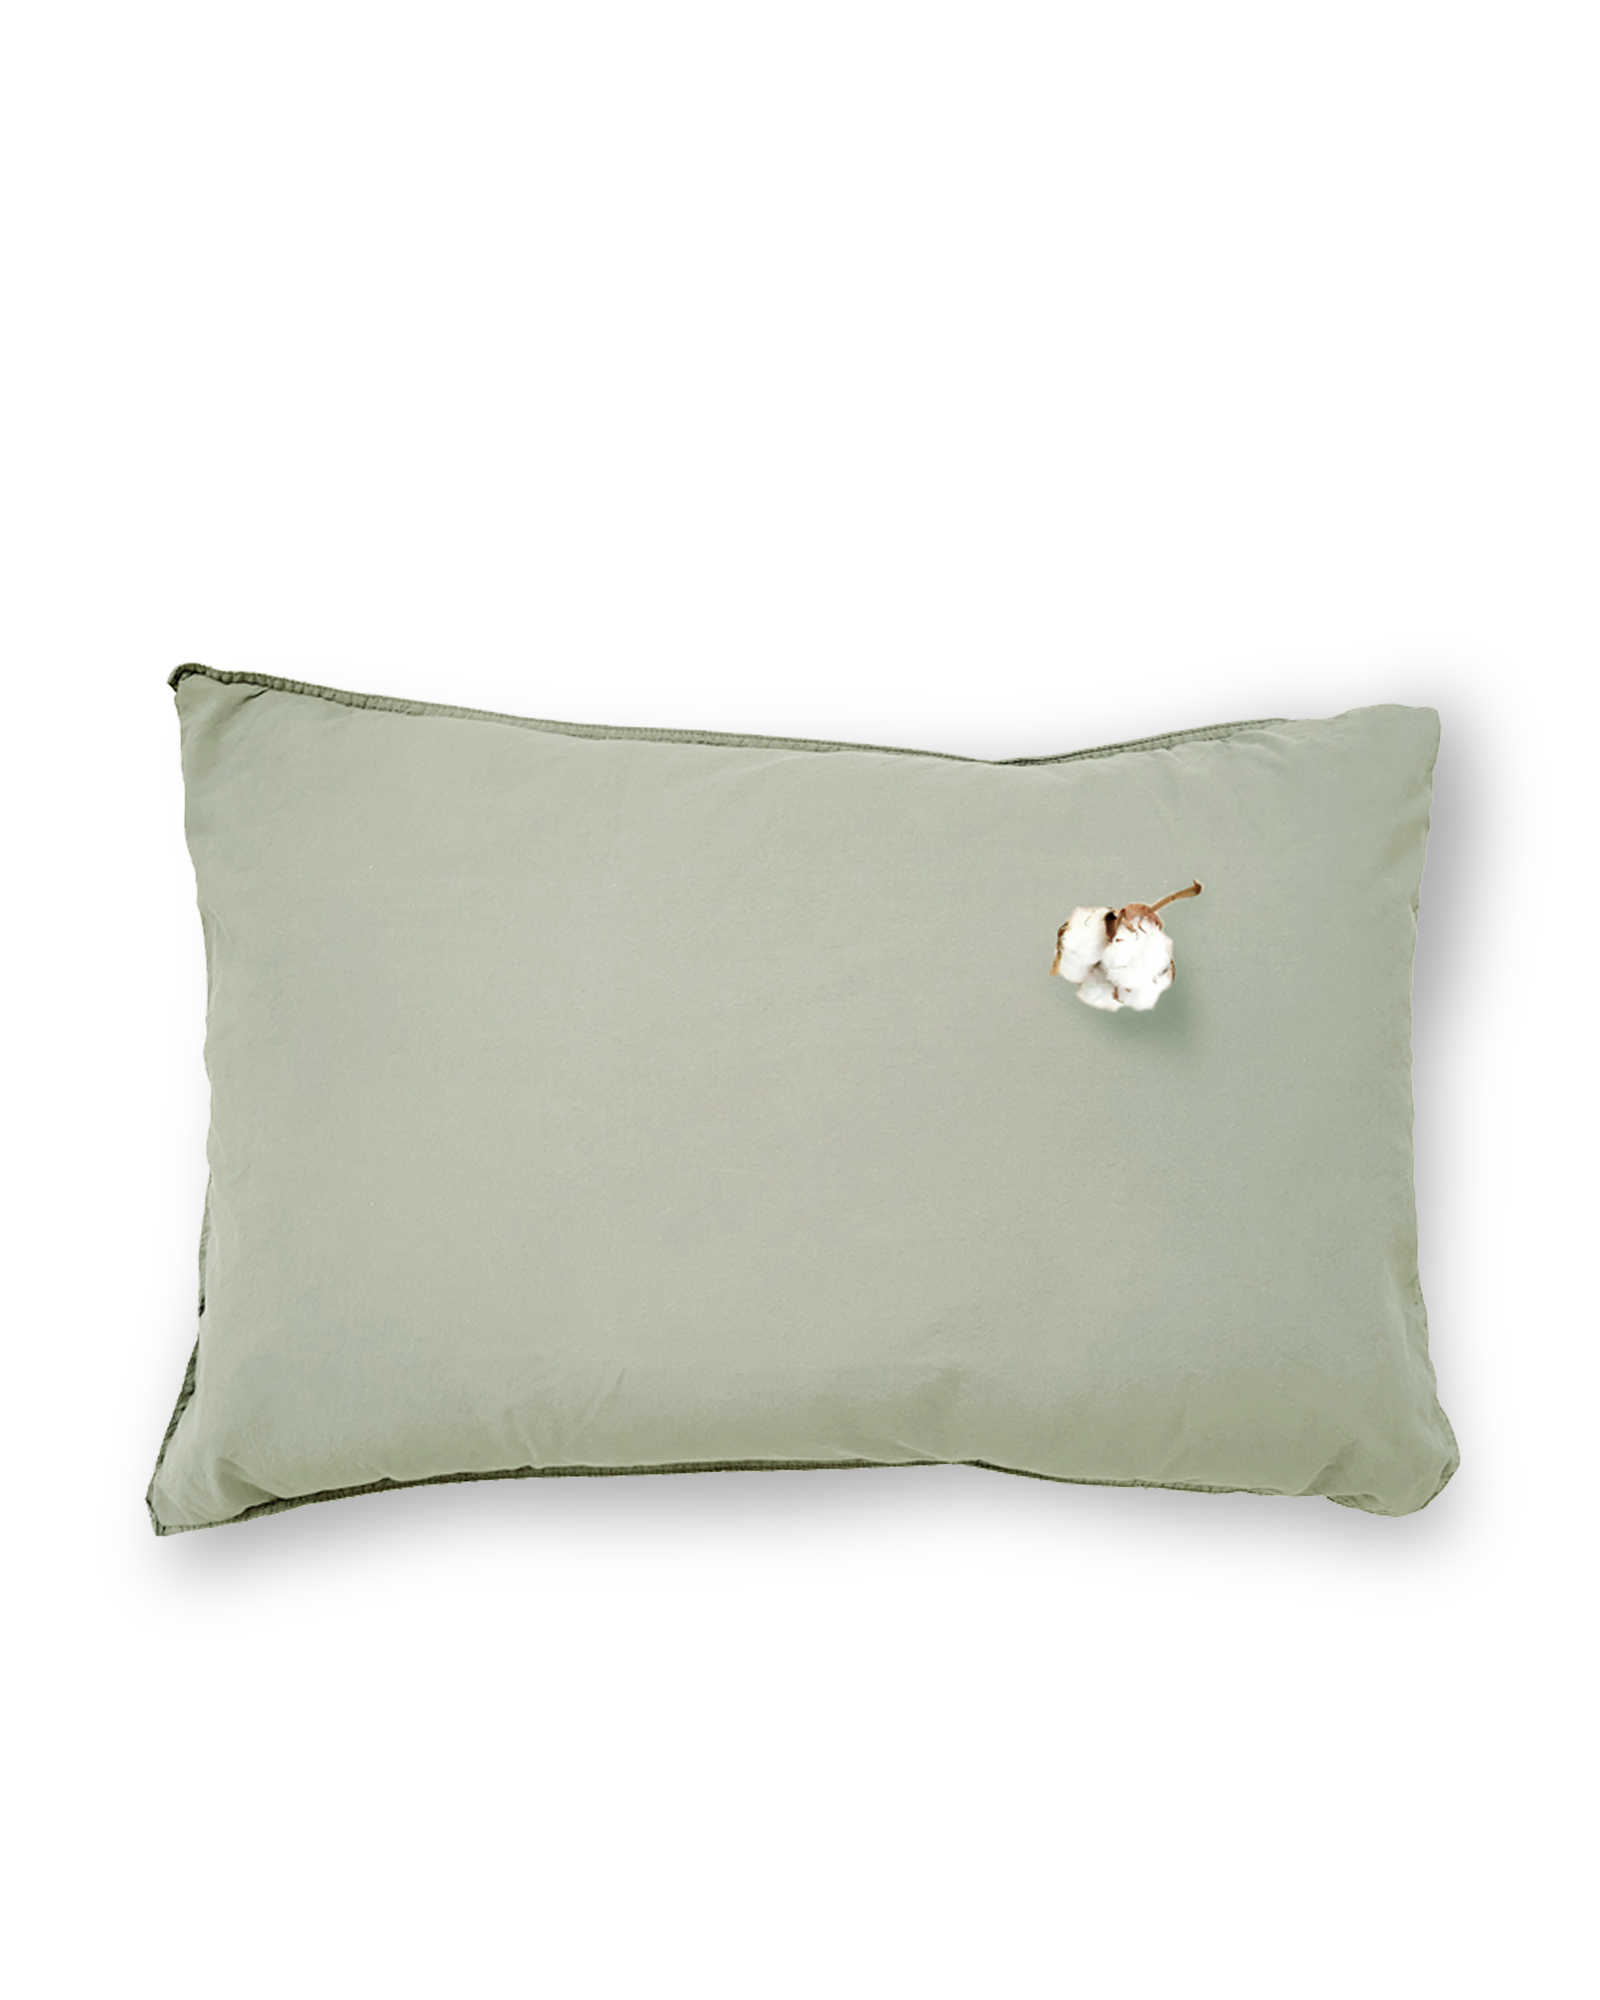 MARIE-MARIE - Cushion VINTAGE COTTON Olive - 40x60 cm - Olive